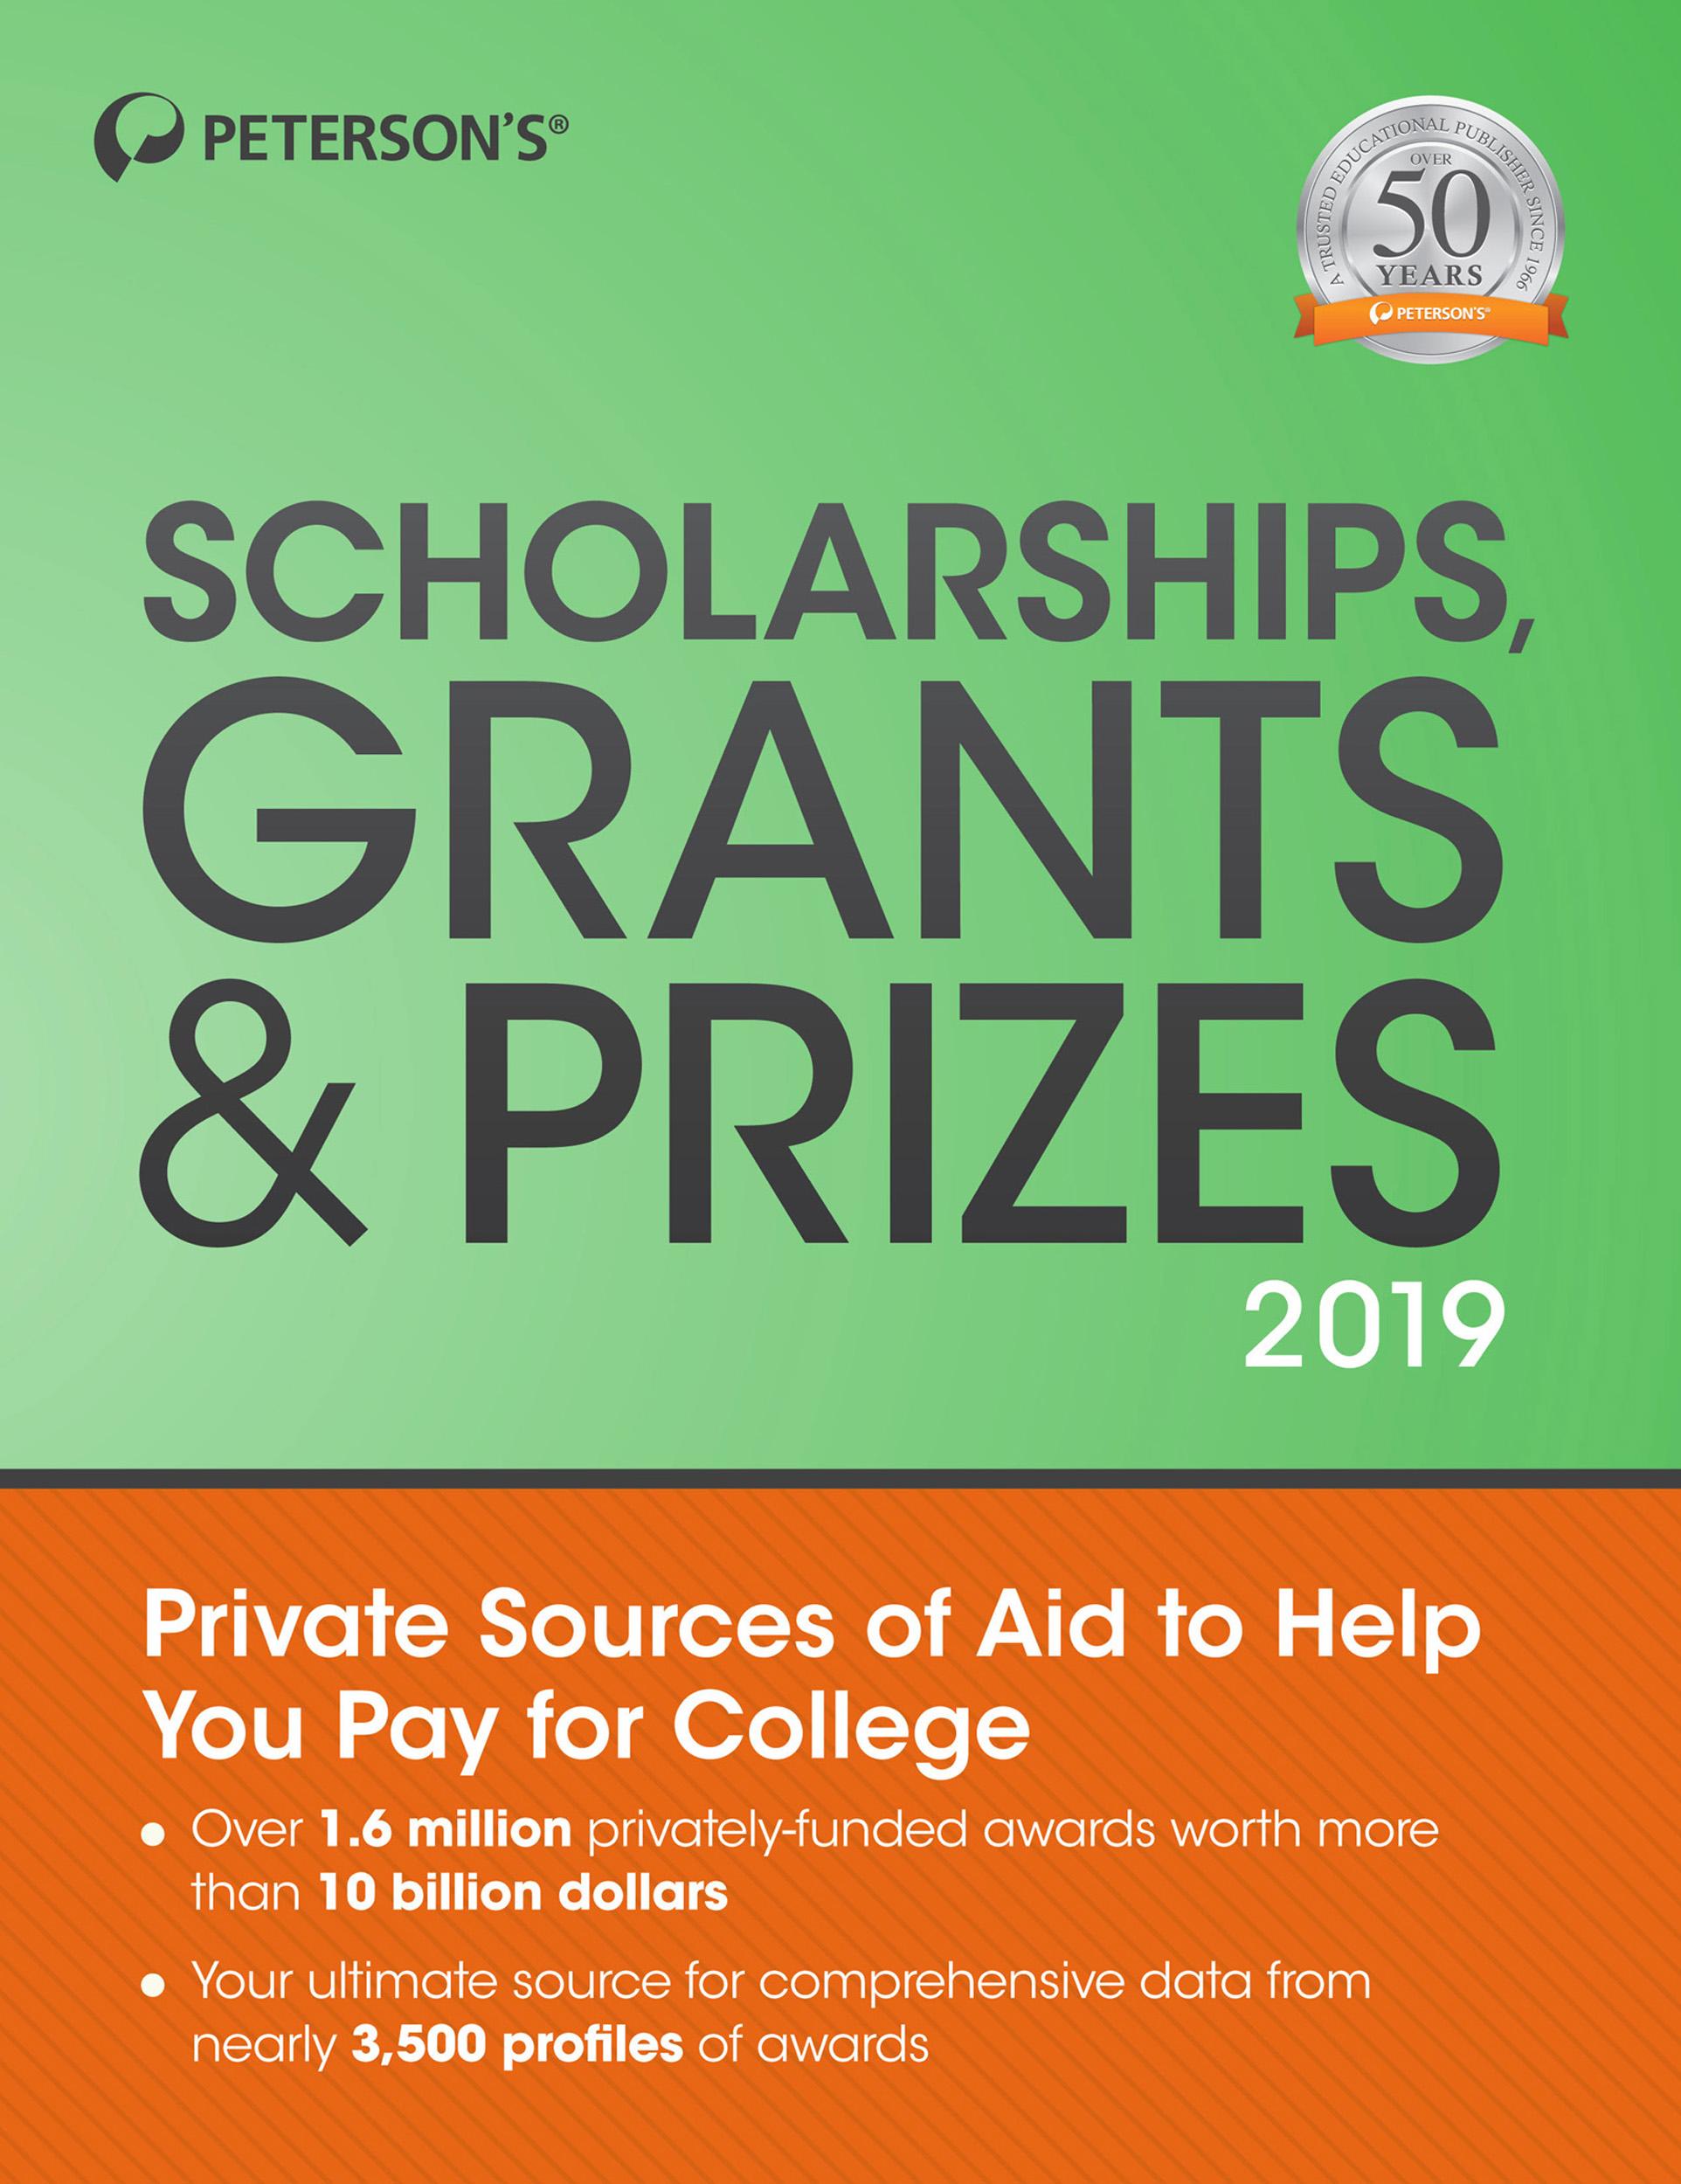 Scholarships, Grants & Prizes 2019 - Walmart.com